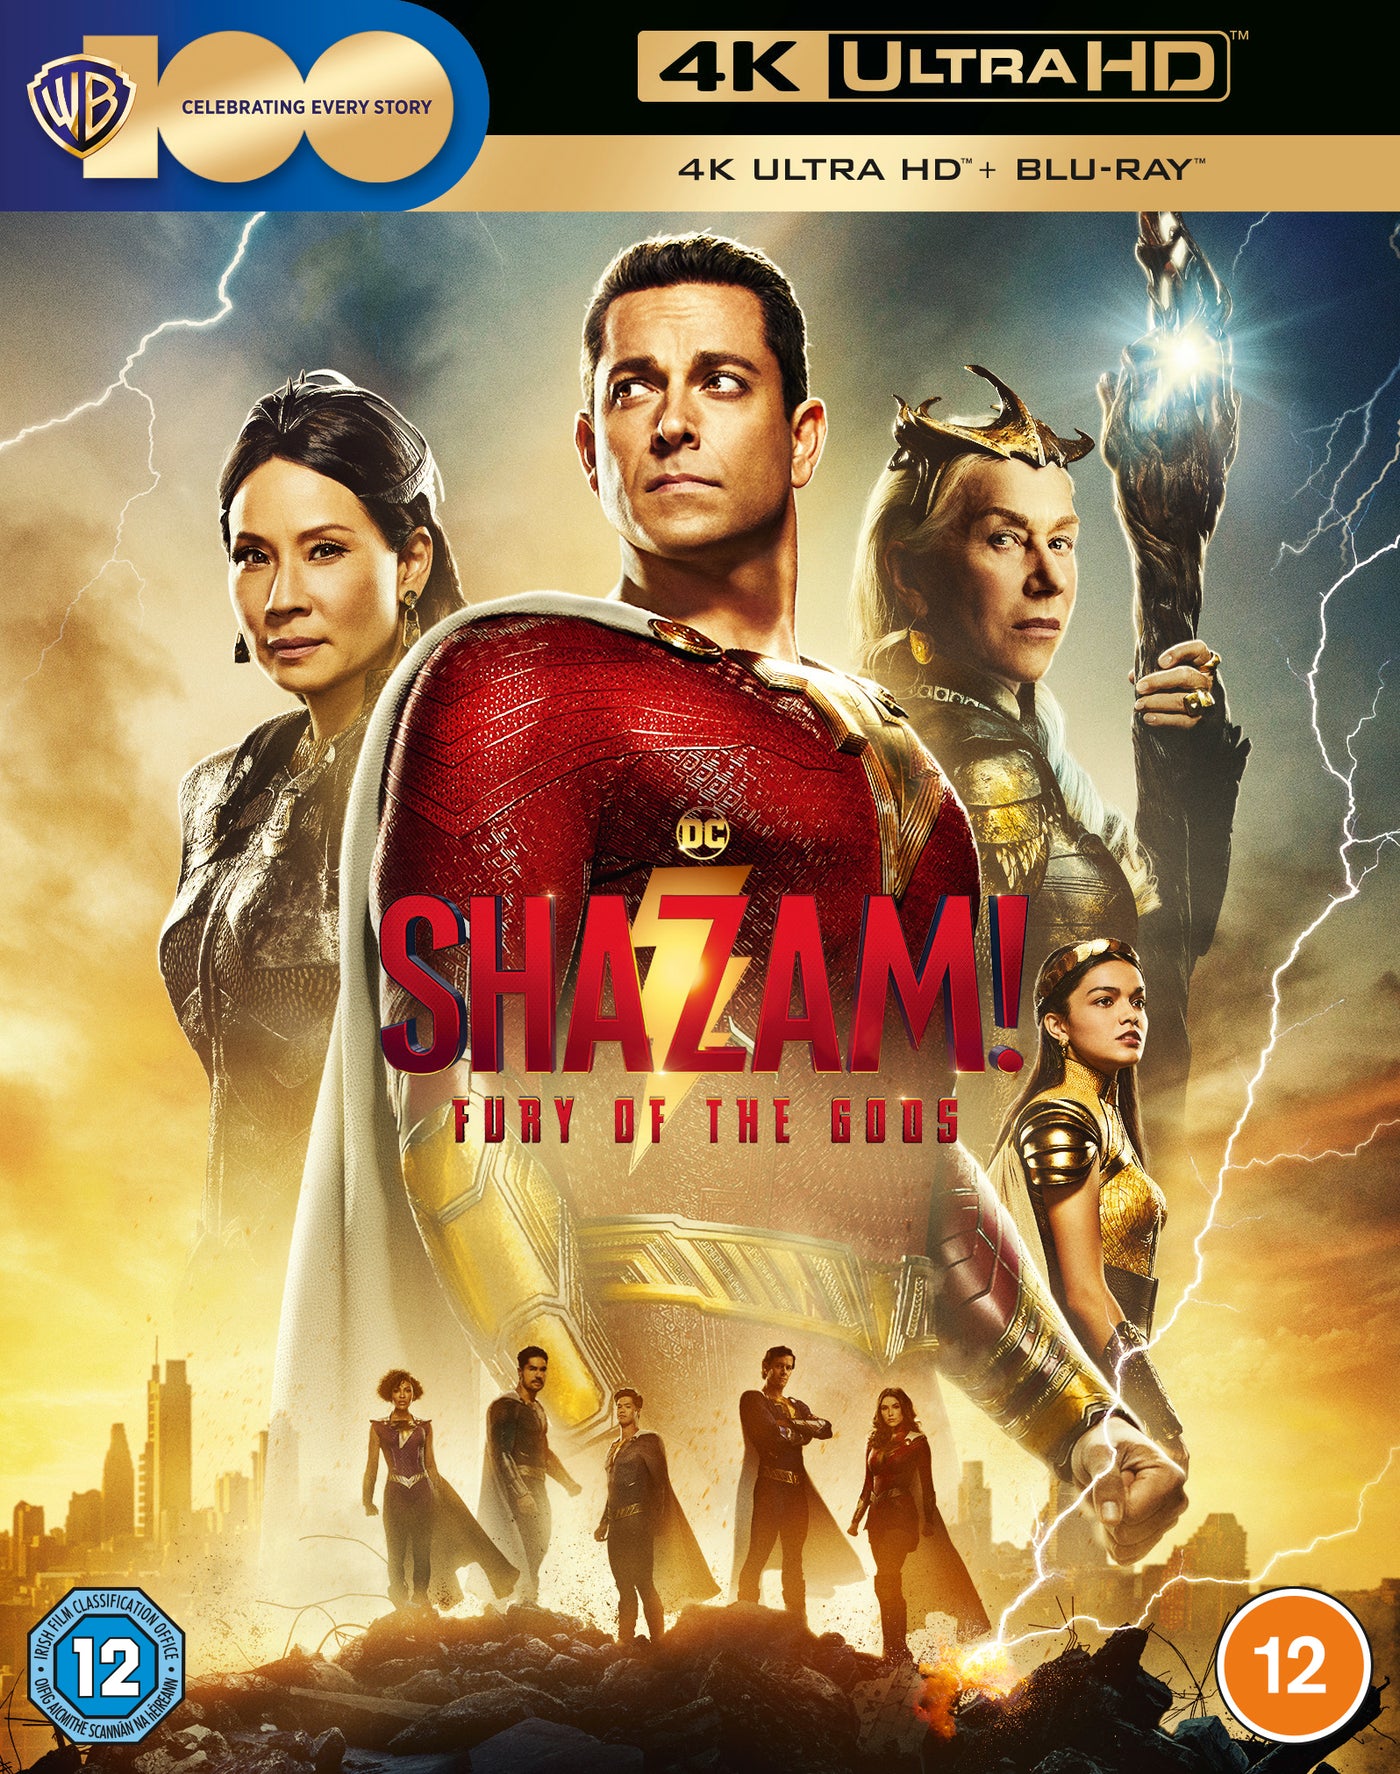 Slideshow: Shazam! Fury of the Gods: The Entire Cast of the